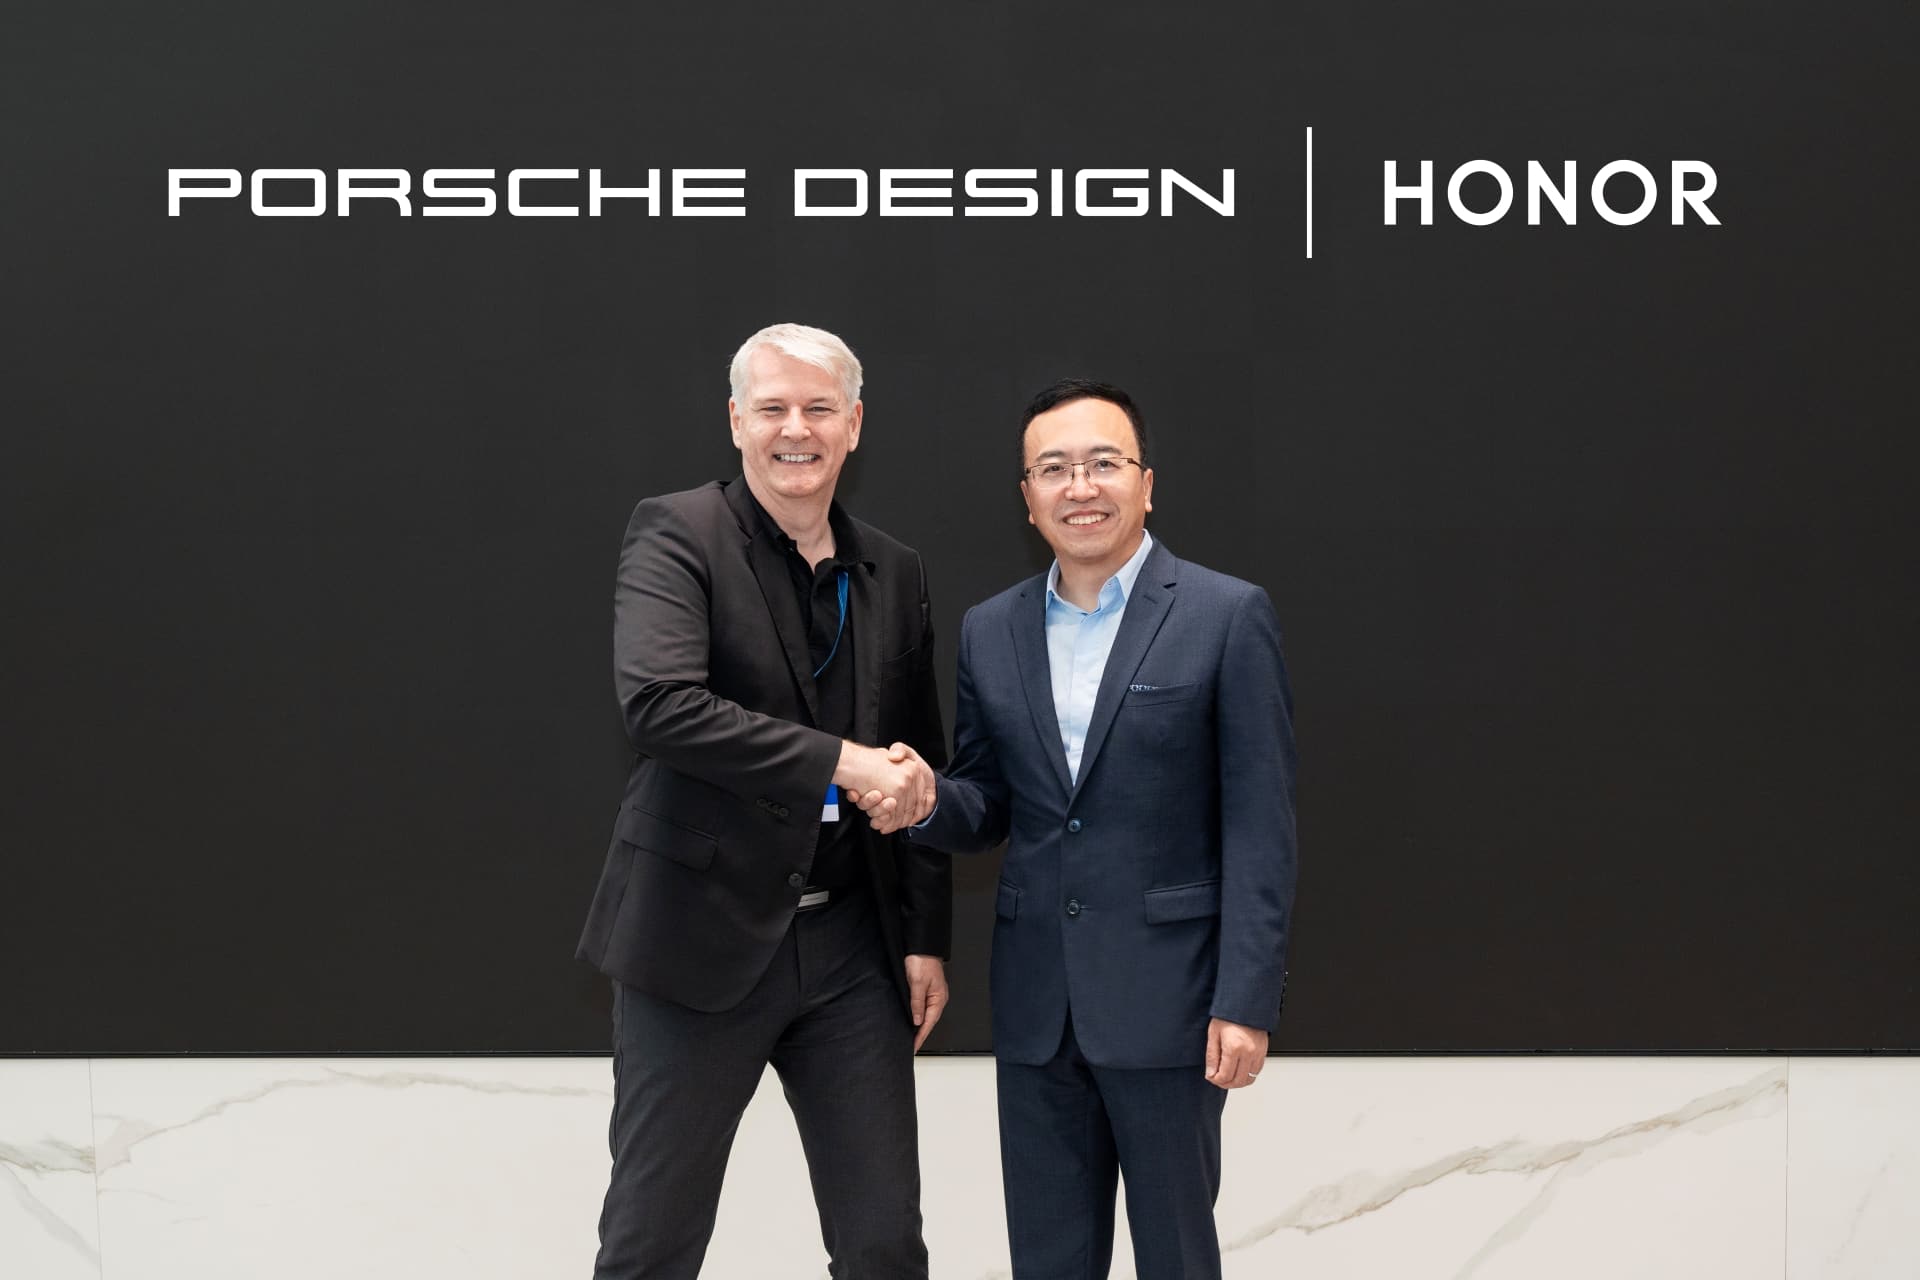 https://www.hihonor.com/content/dam/honor/global/news/2023/honor-porsche-design-partnership-announcement/img1.jpg